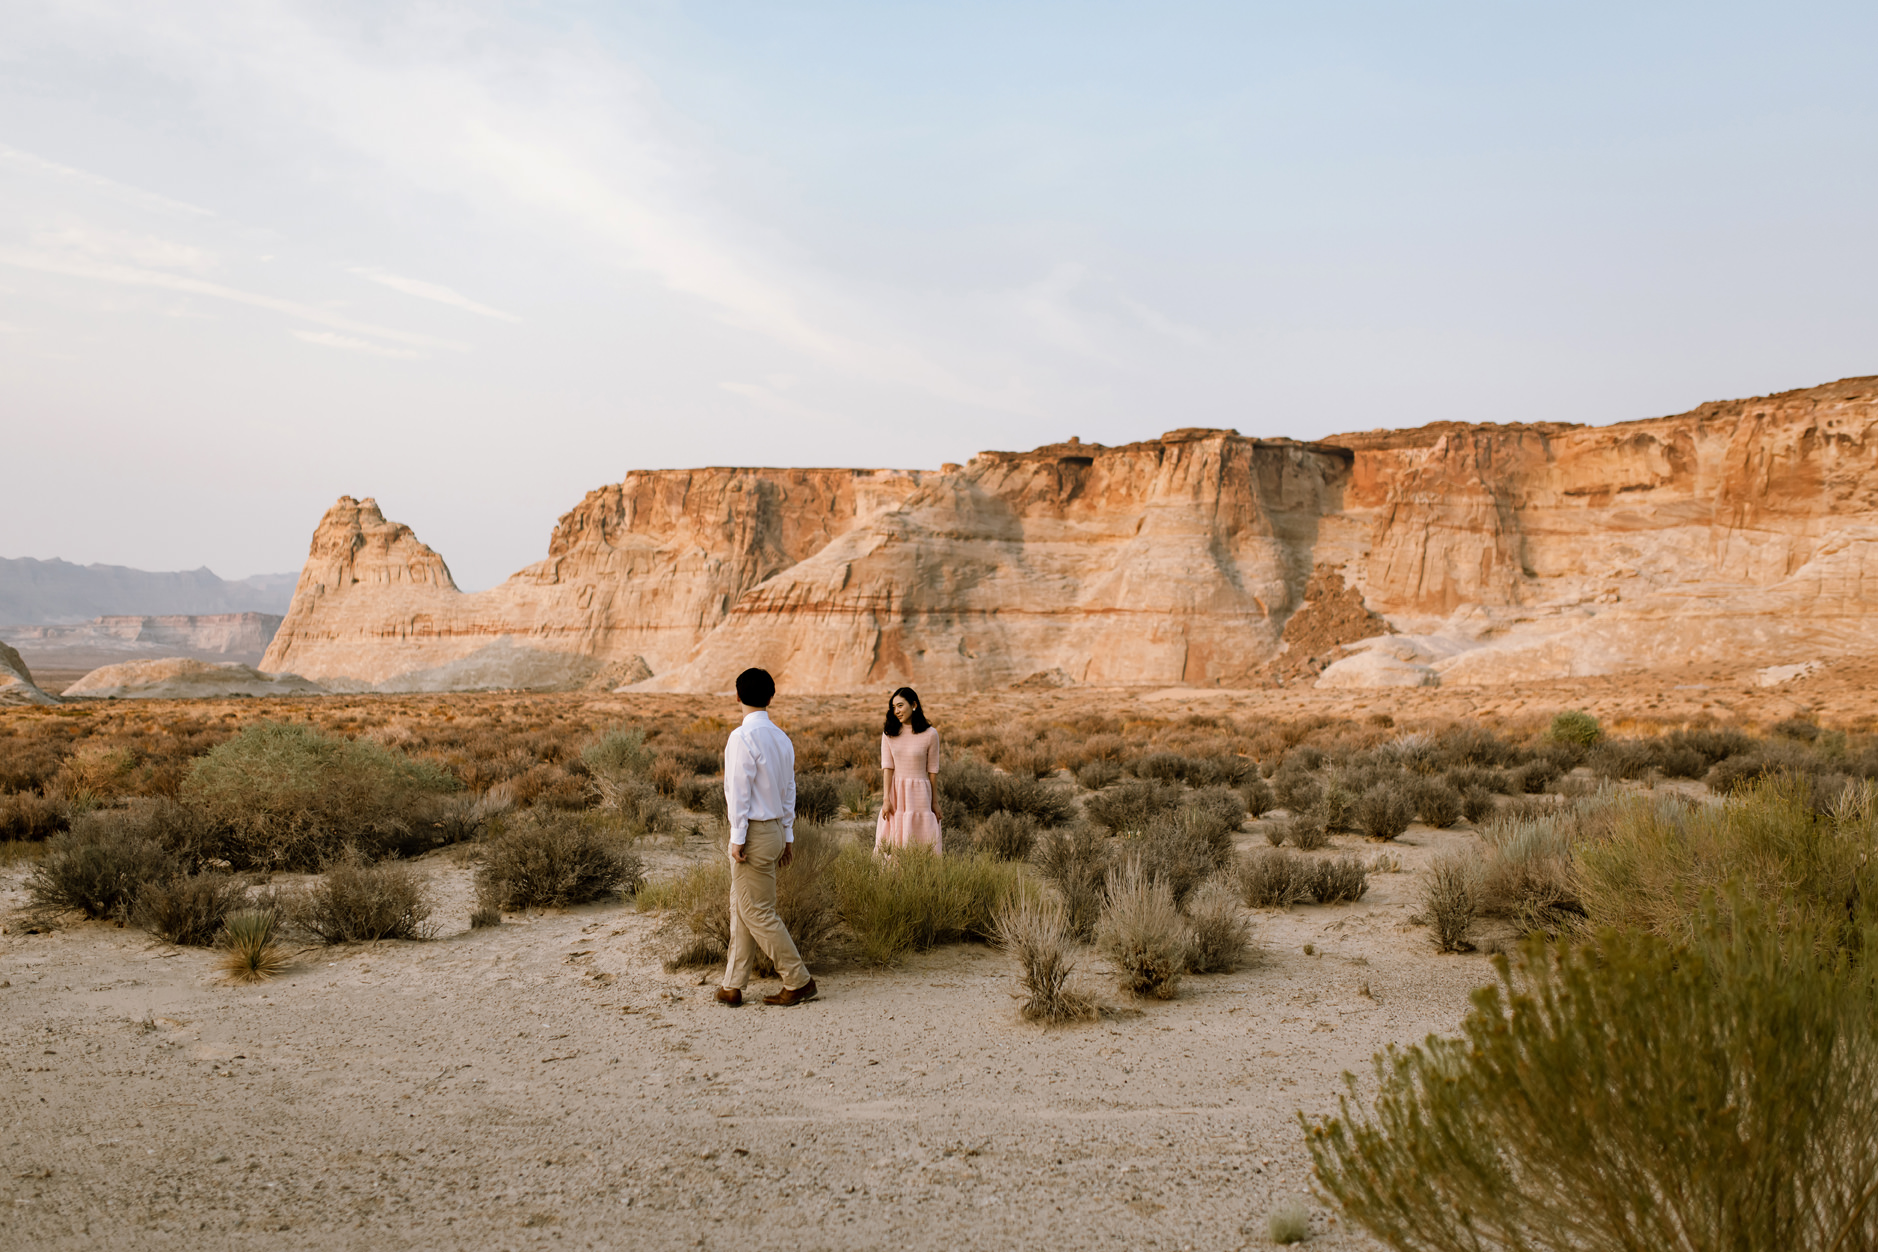 Husband walks around waist high desert brush towards his wife wearing a pink dress.